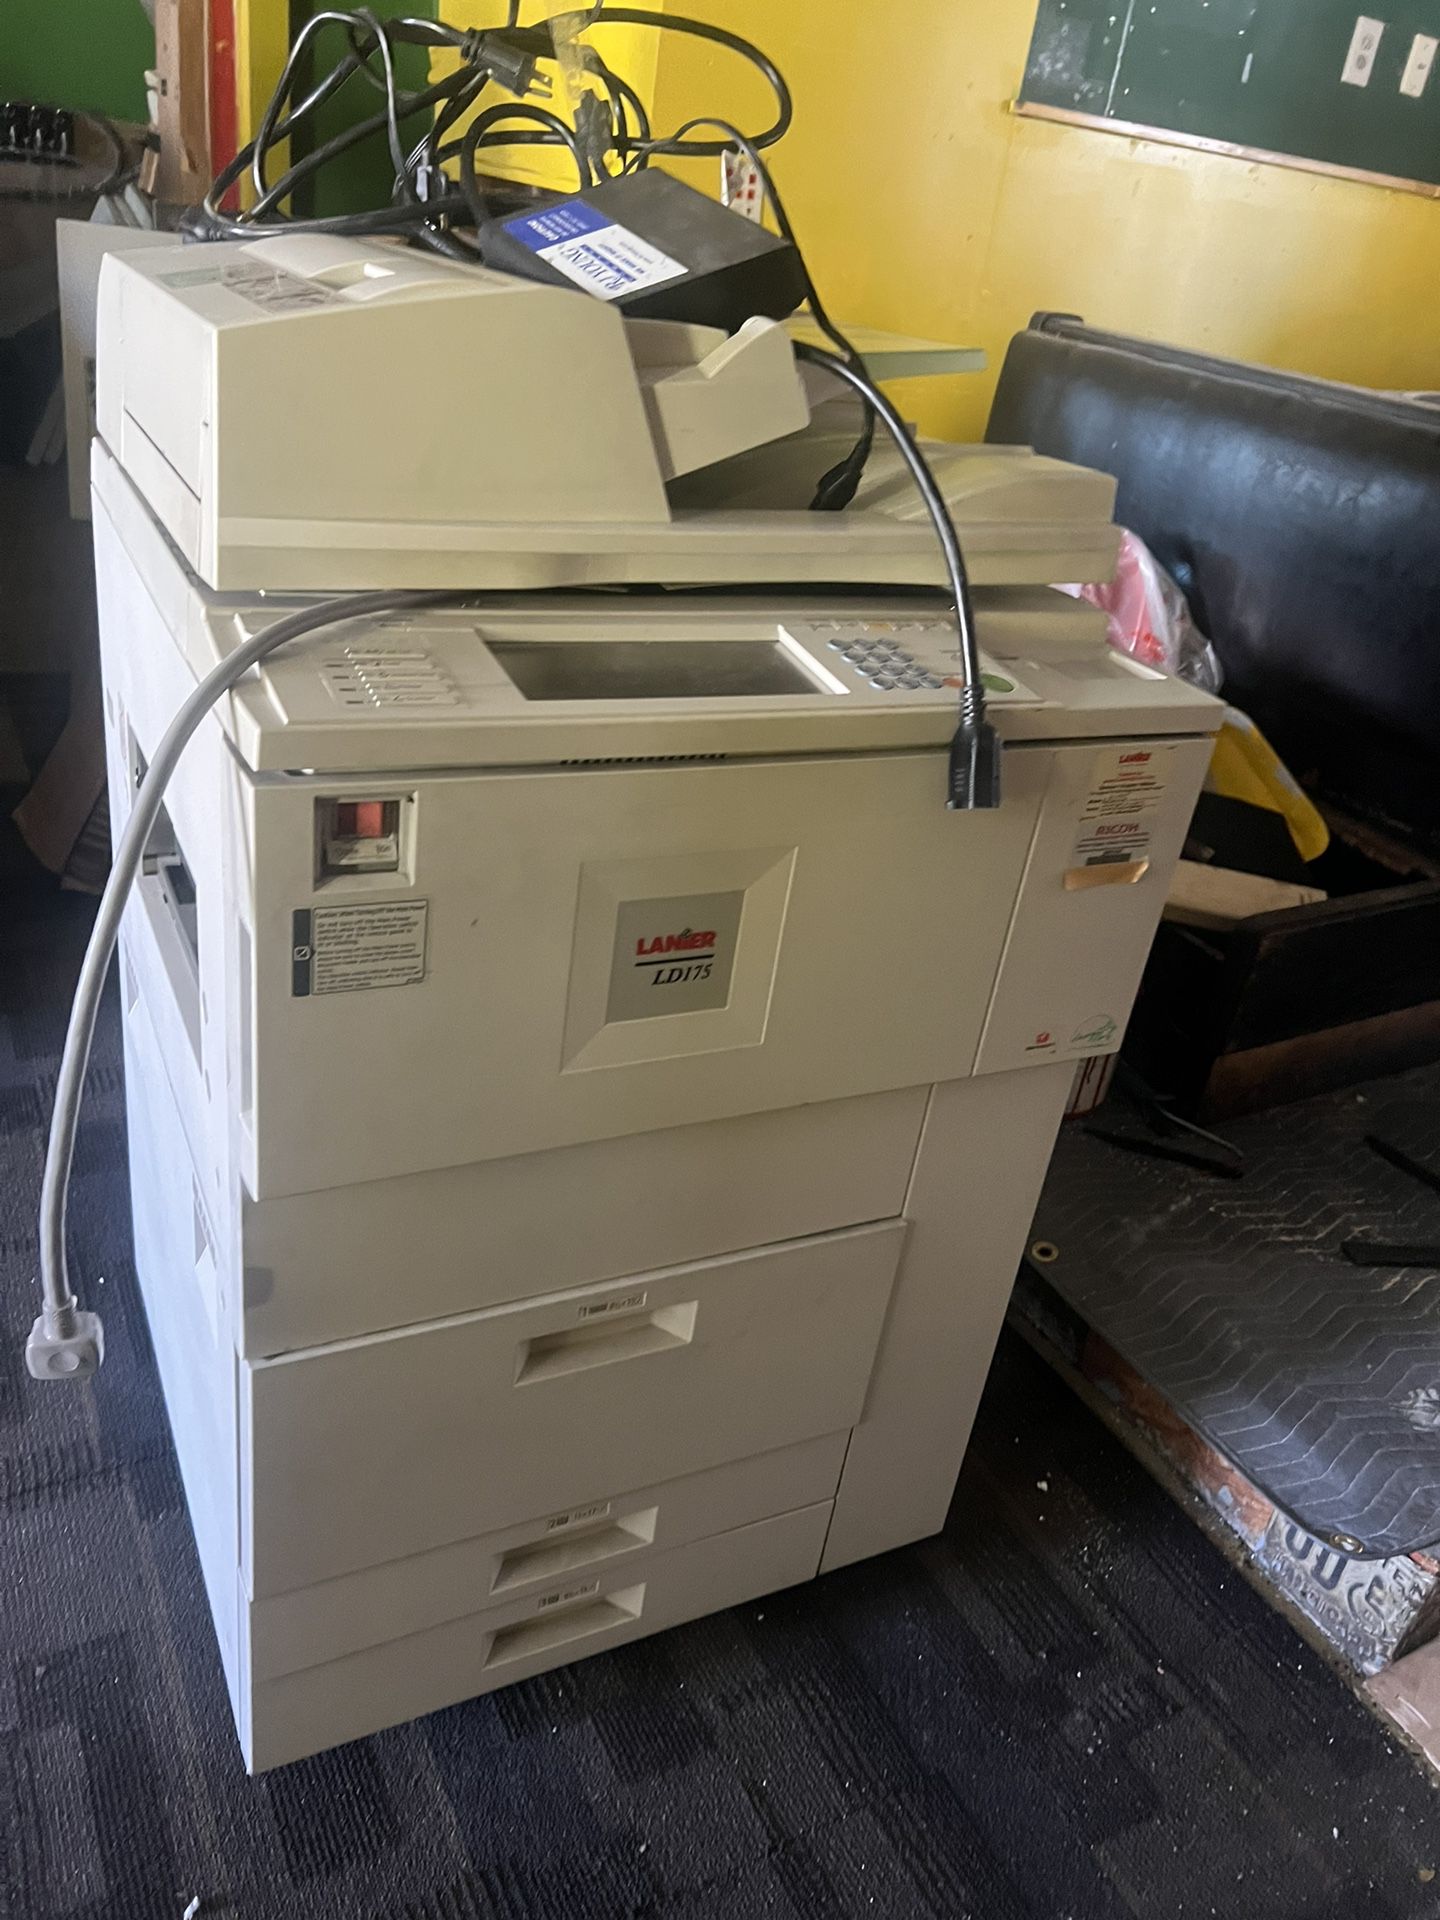 Commercial printer